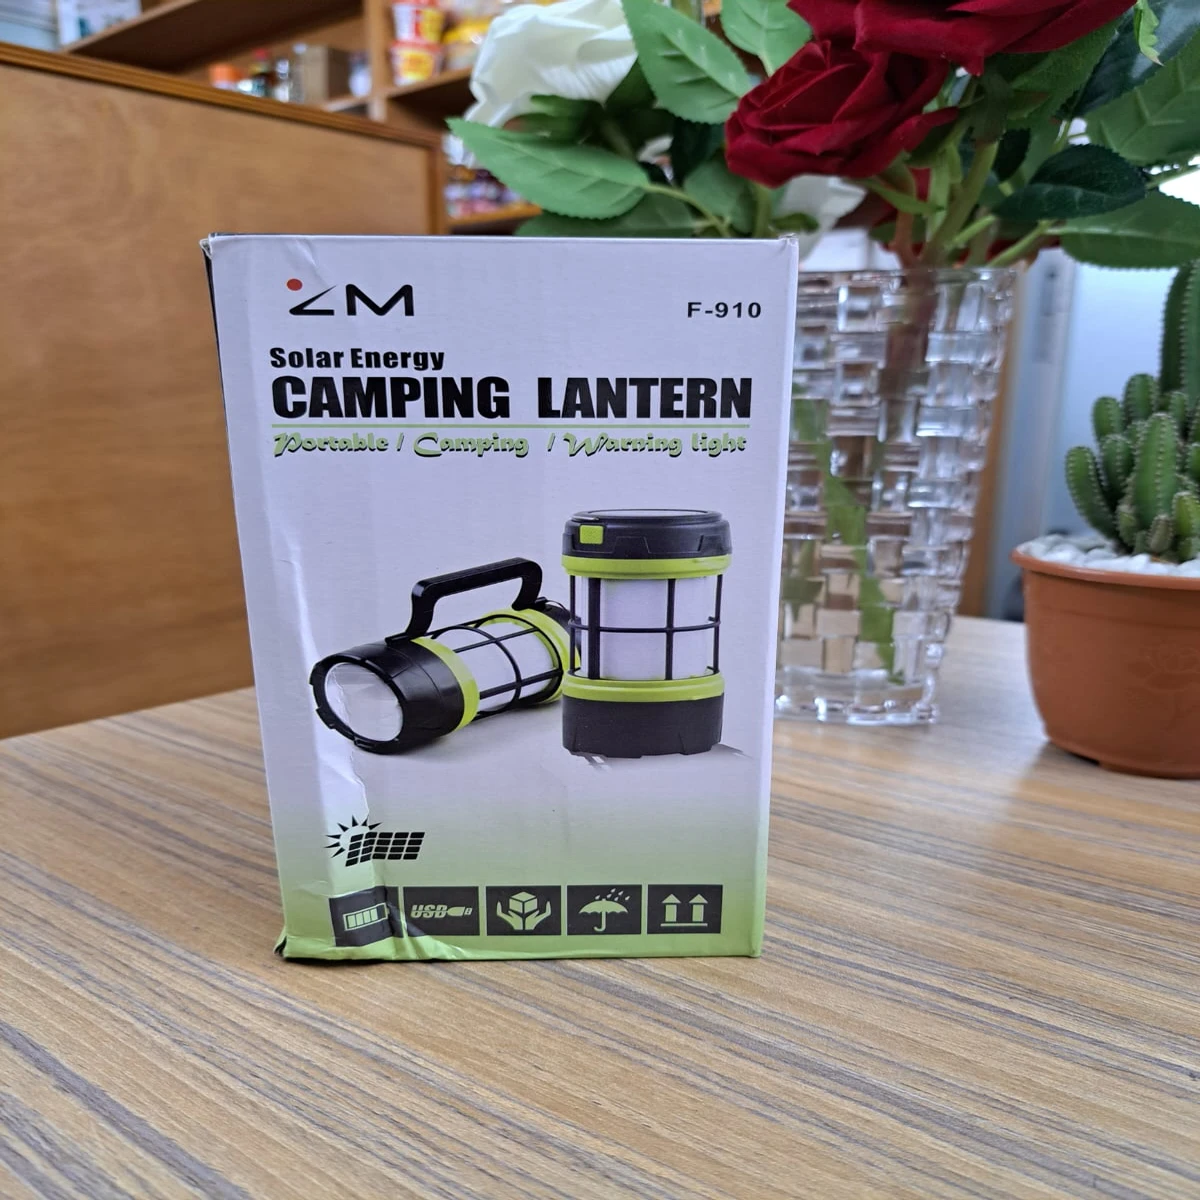 Solar energy camping lanter.